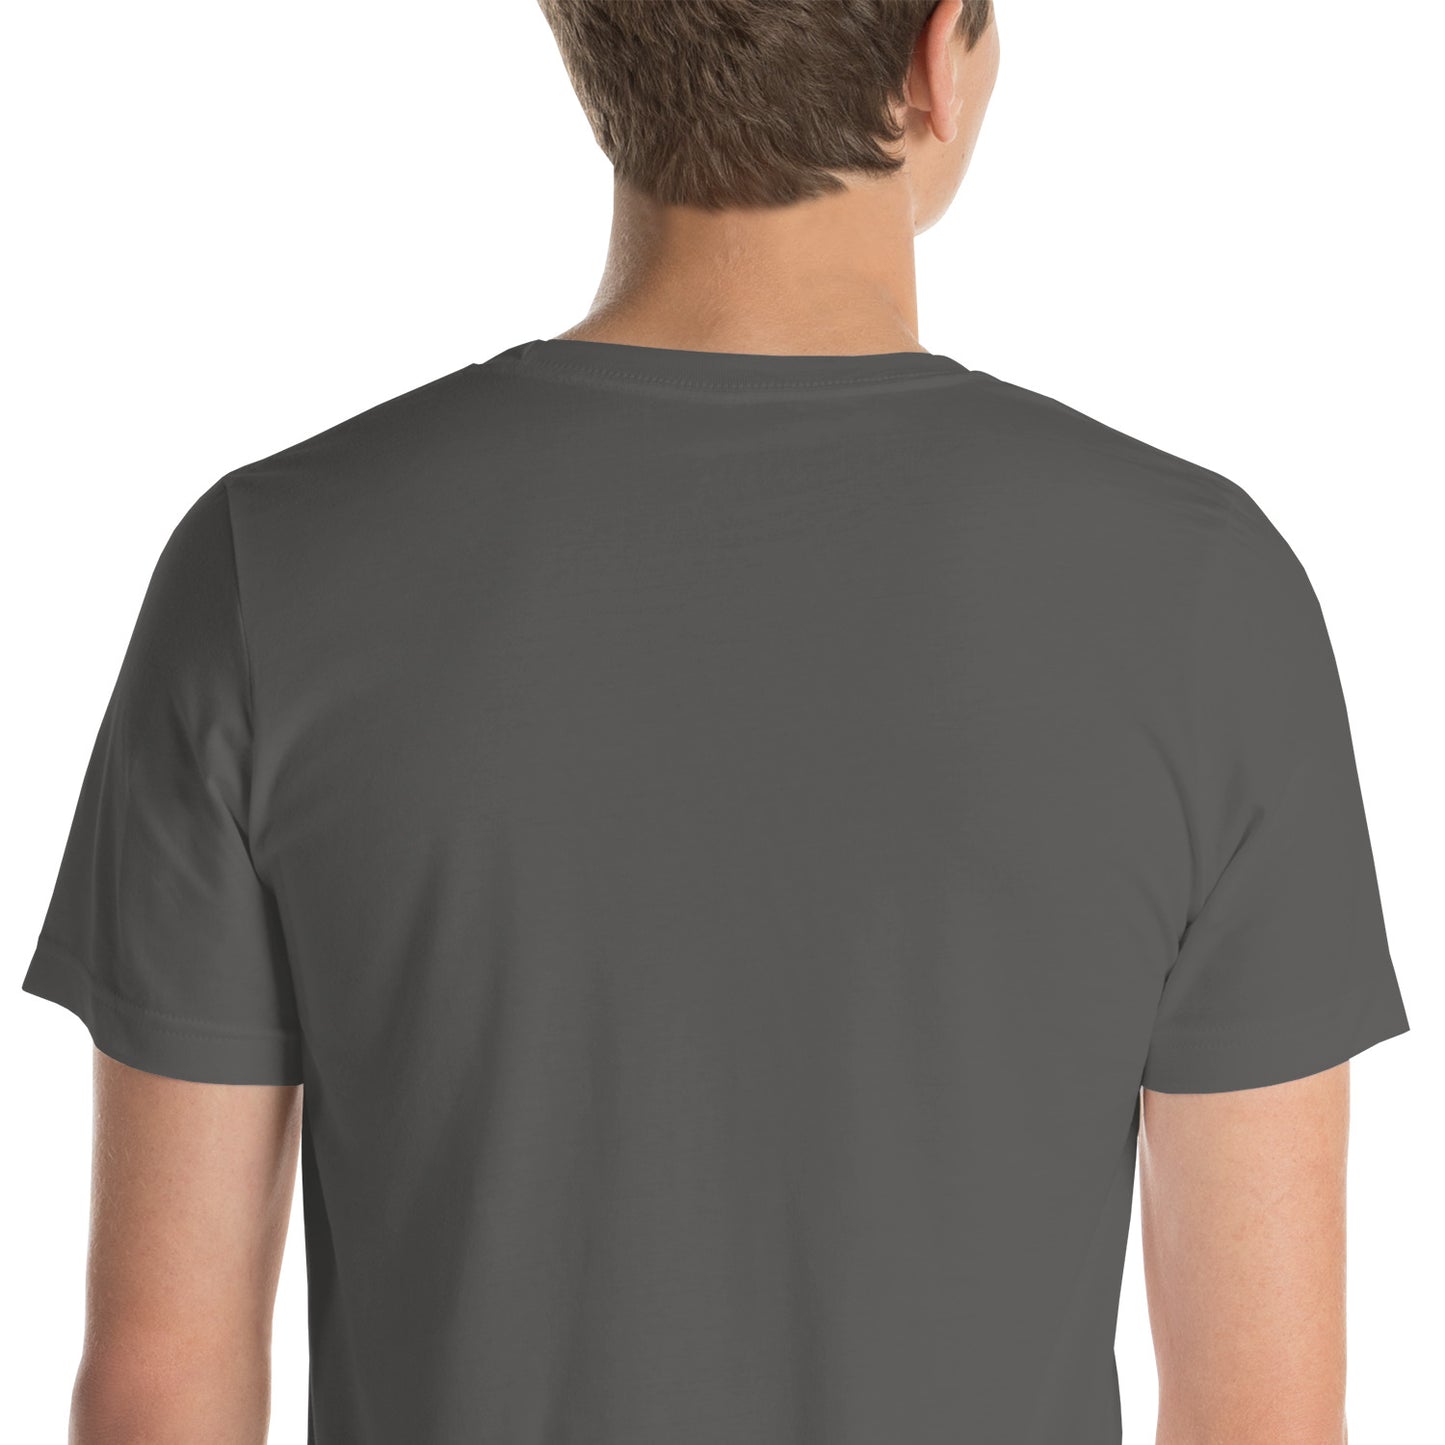 TS Spurs - Premium t-shirt